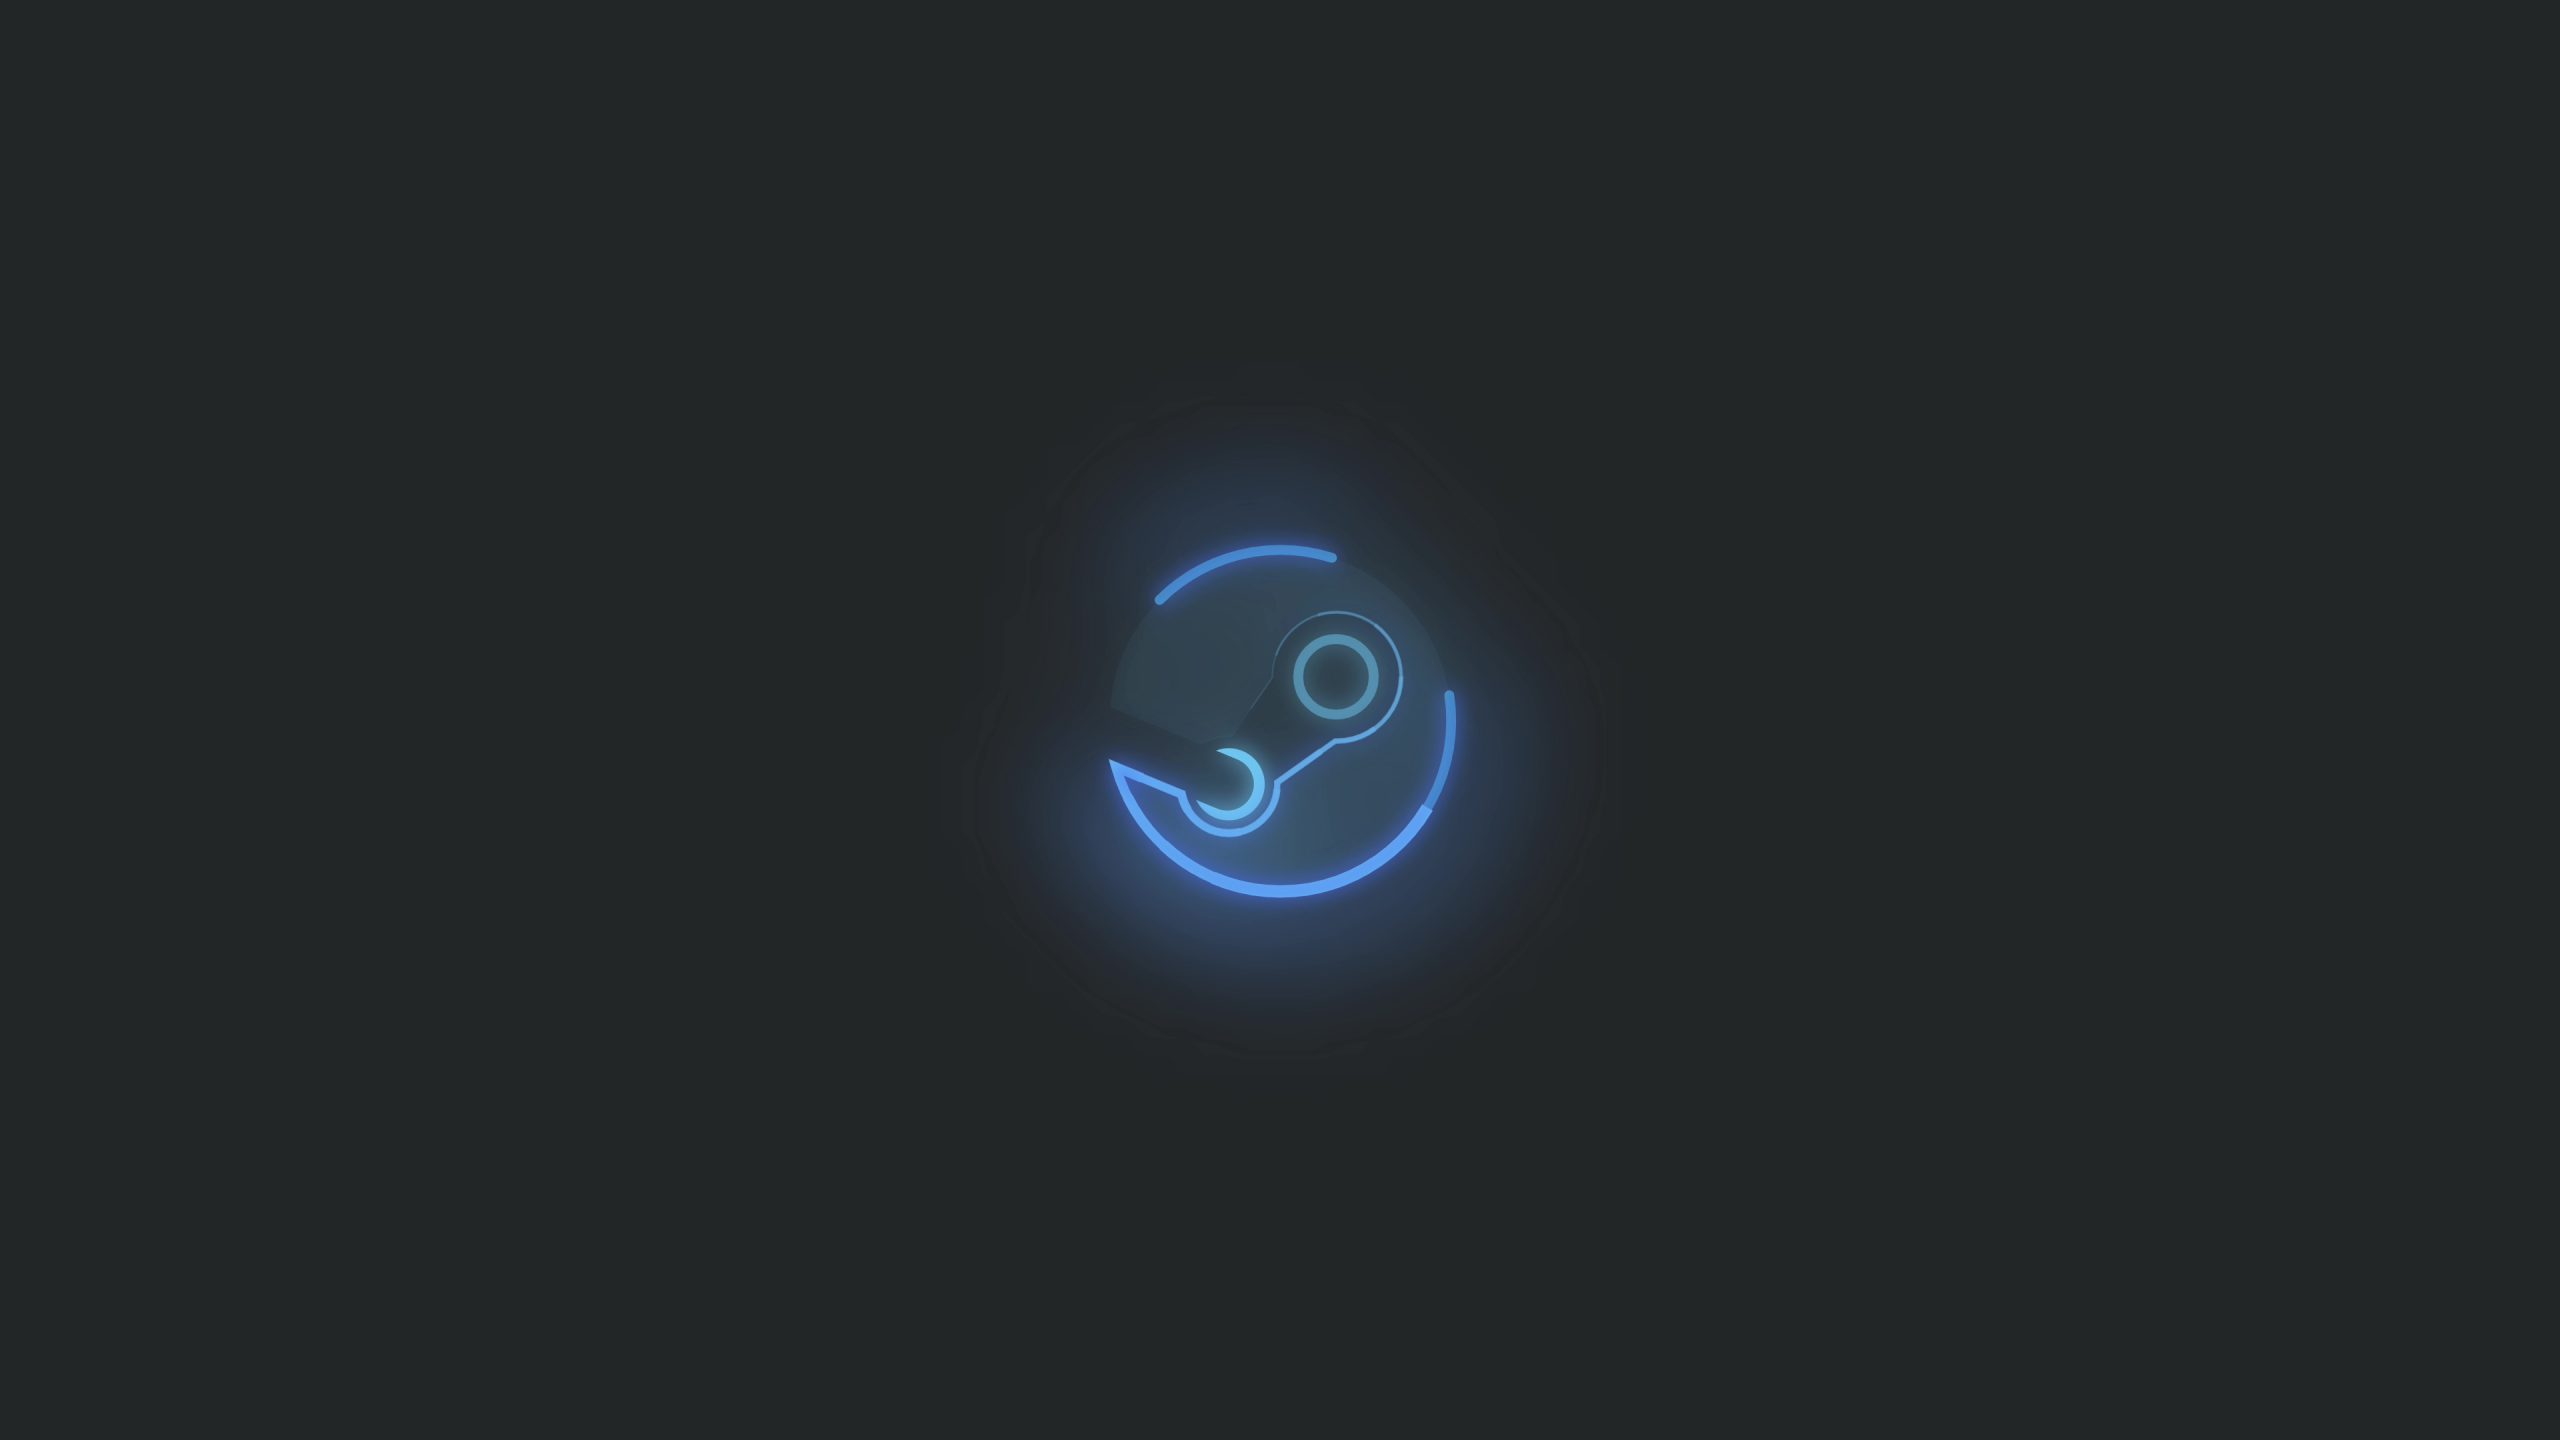 Steam Neon Logo Loop Live Wallpaper - Live Wallpaper